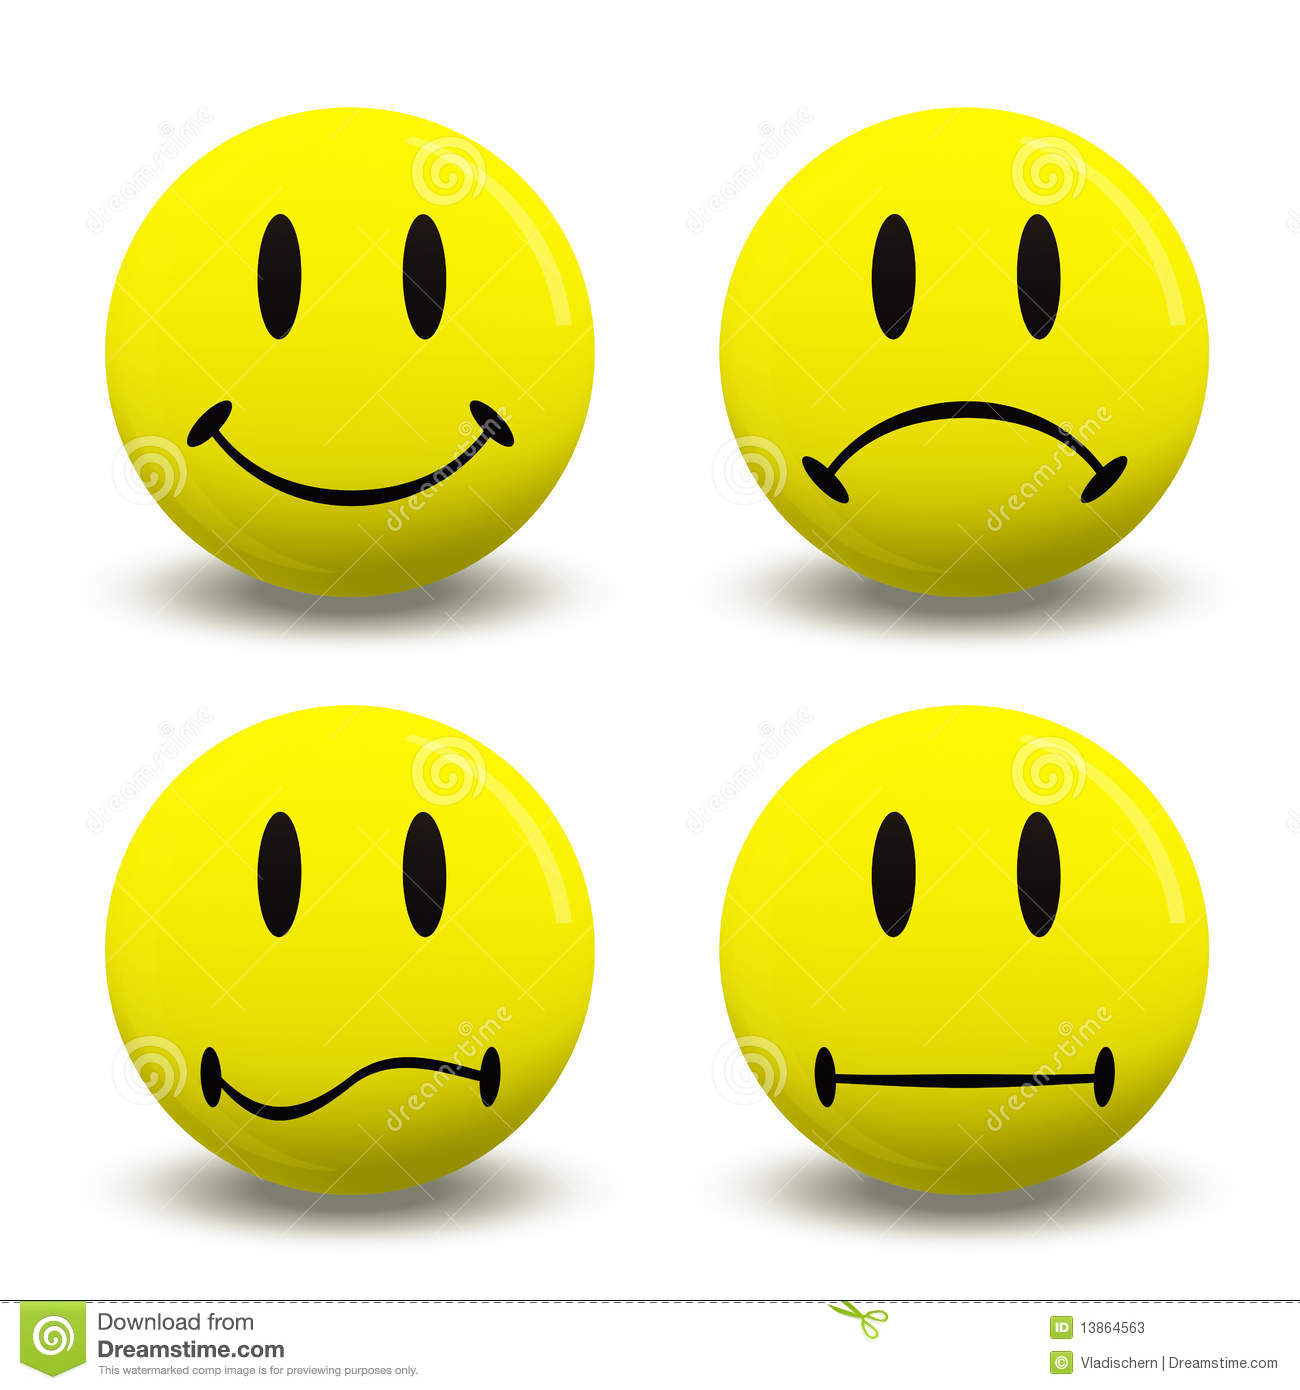 Feelings Clipart Symbols Emotions 13864563 Jpg